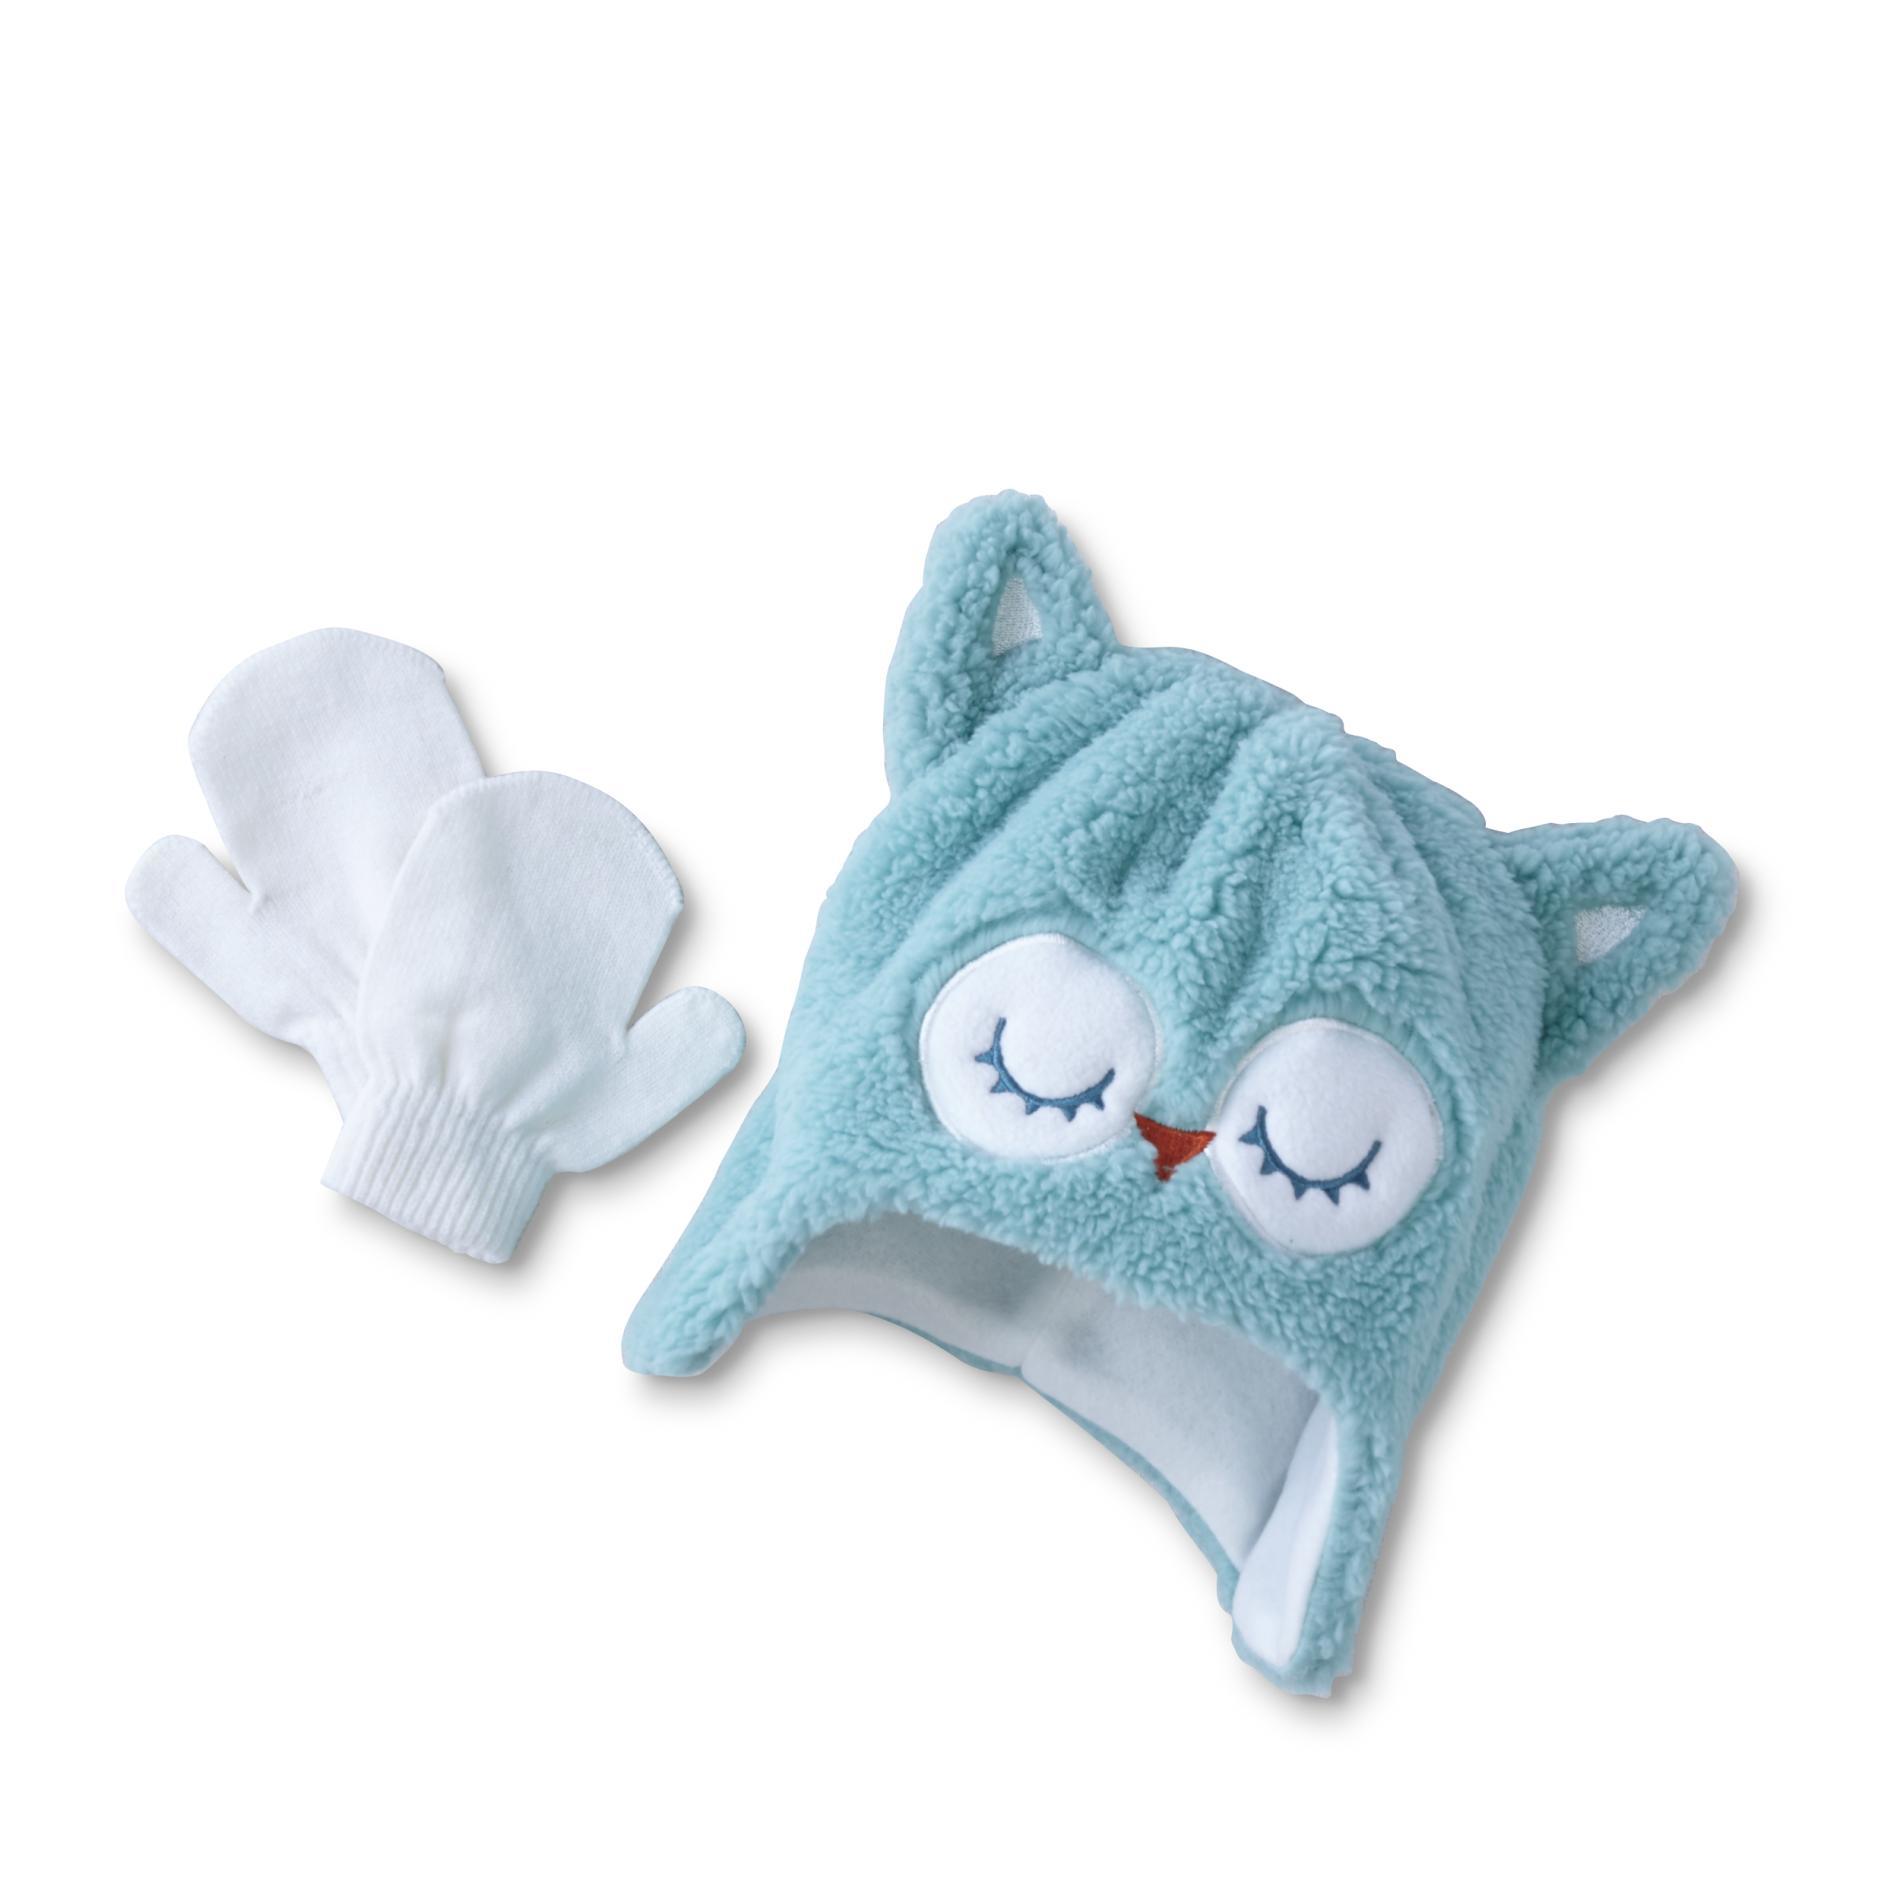 Aquarius Infant & Toddler Girls' Earflap Hat & Mittens - Owl